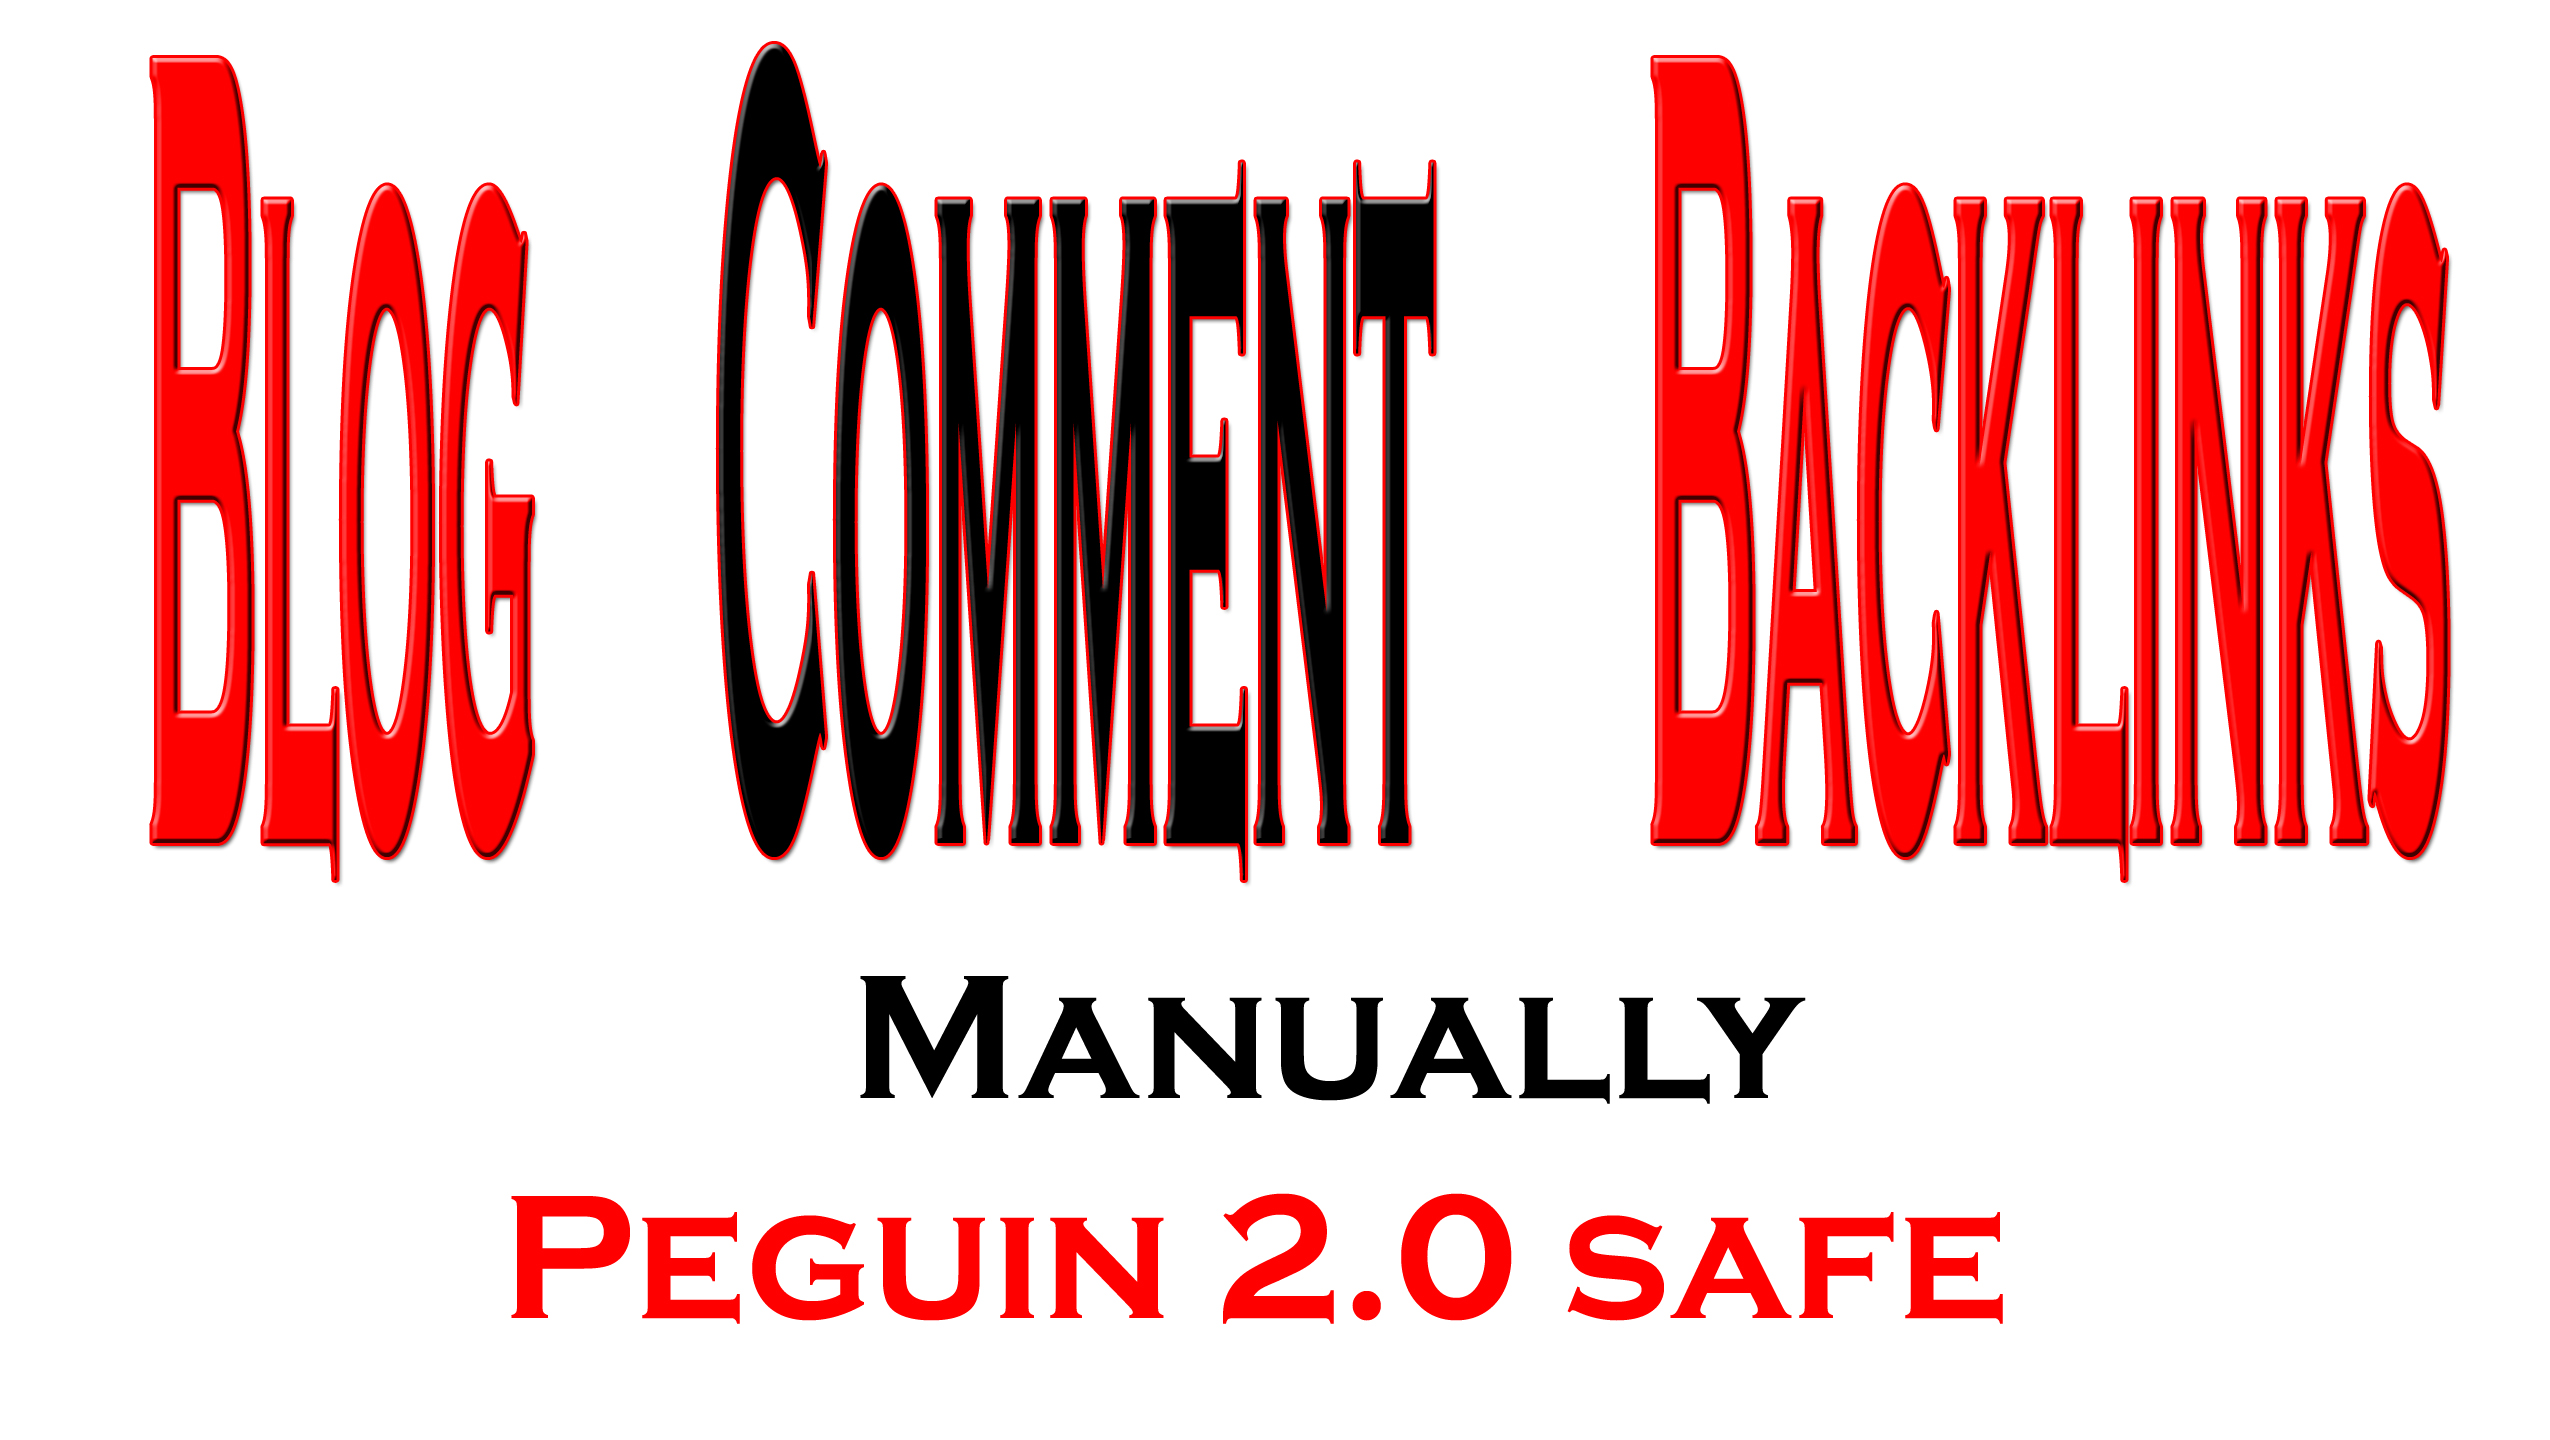 Get Manually Peguin 2.0 safe 5 PR3 + 5 PR4 + 5 PR5 Blog Commenting 100 Dofollow Backlinks